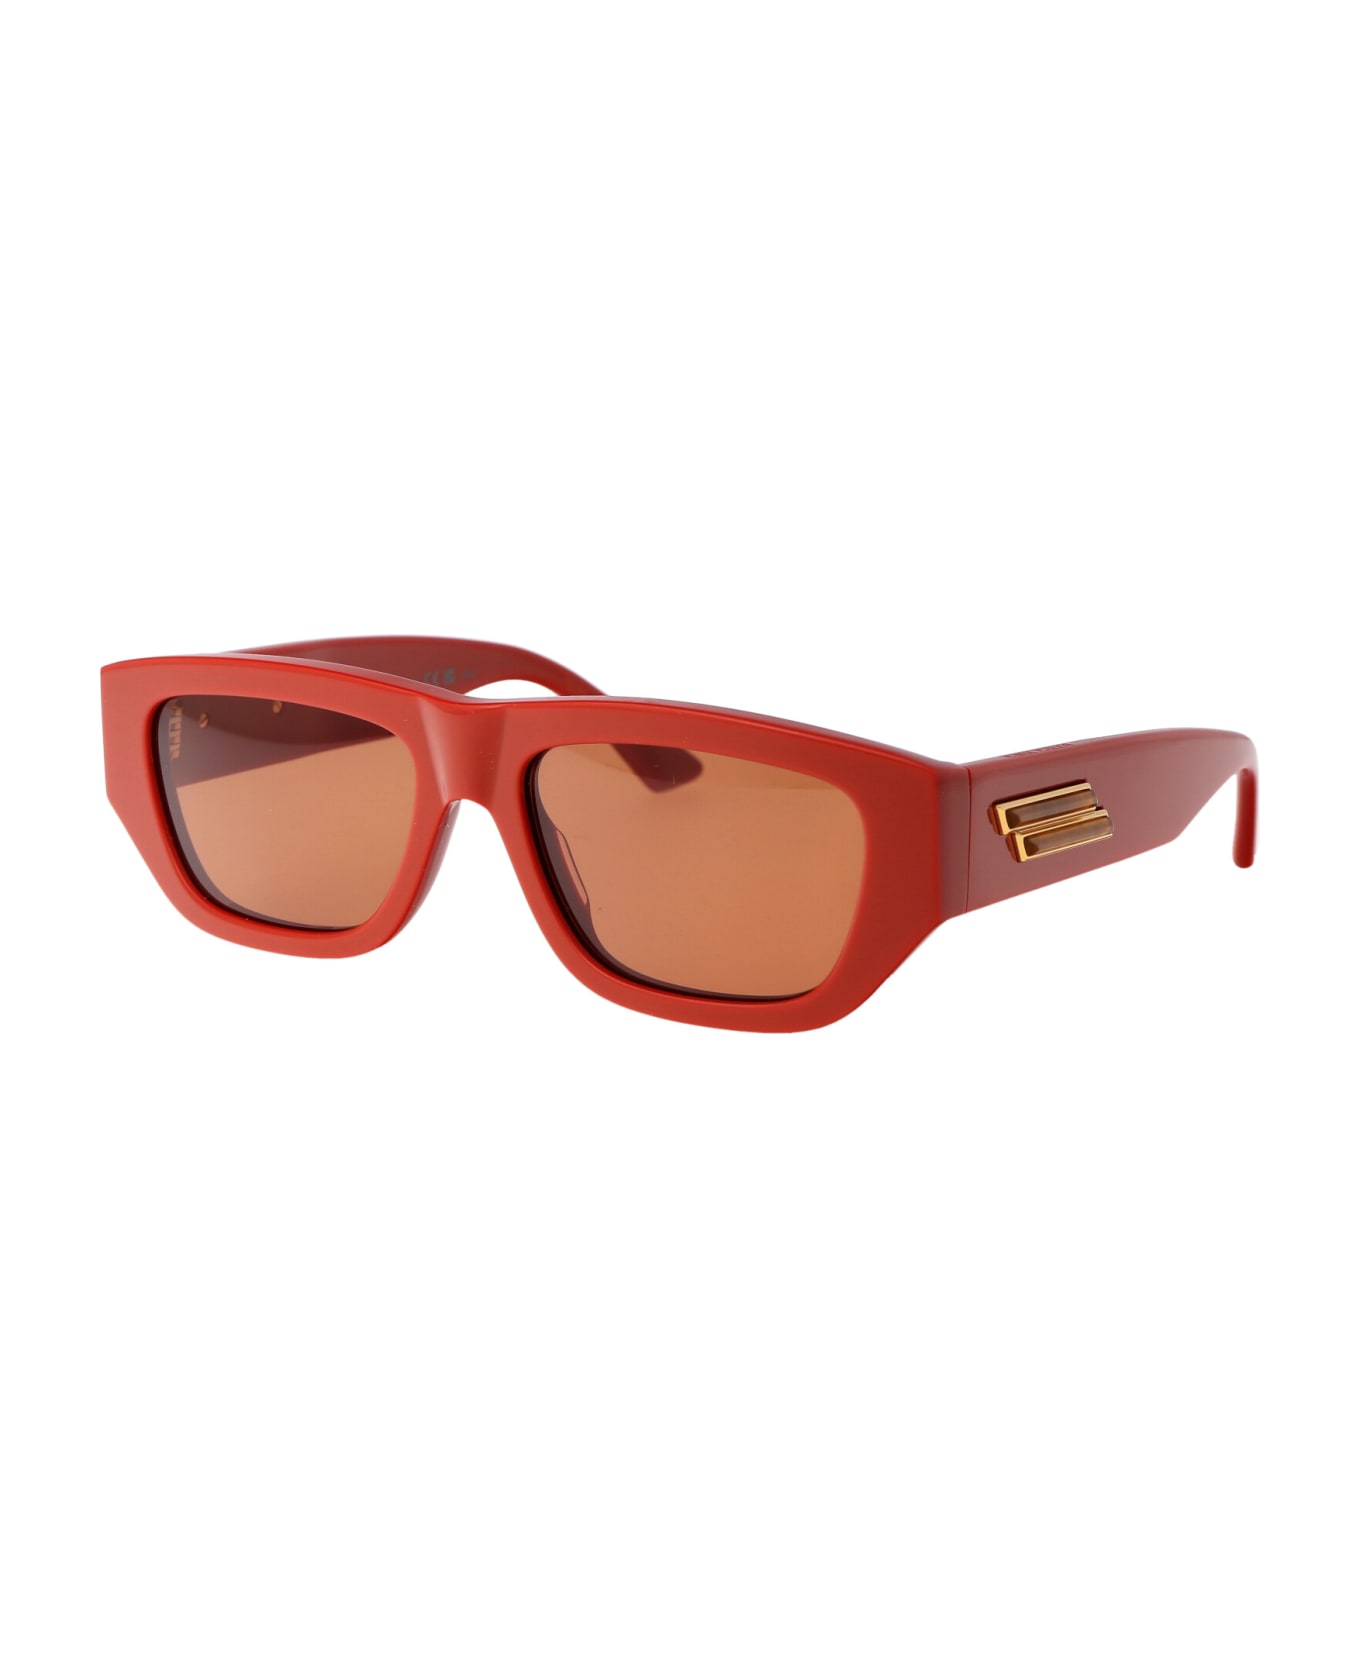 Bottega Veneta Eyewear Bv1252s Sunglasses - 004 ORANGE ORANGE BROWN